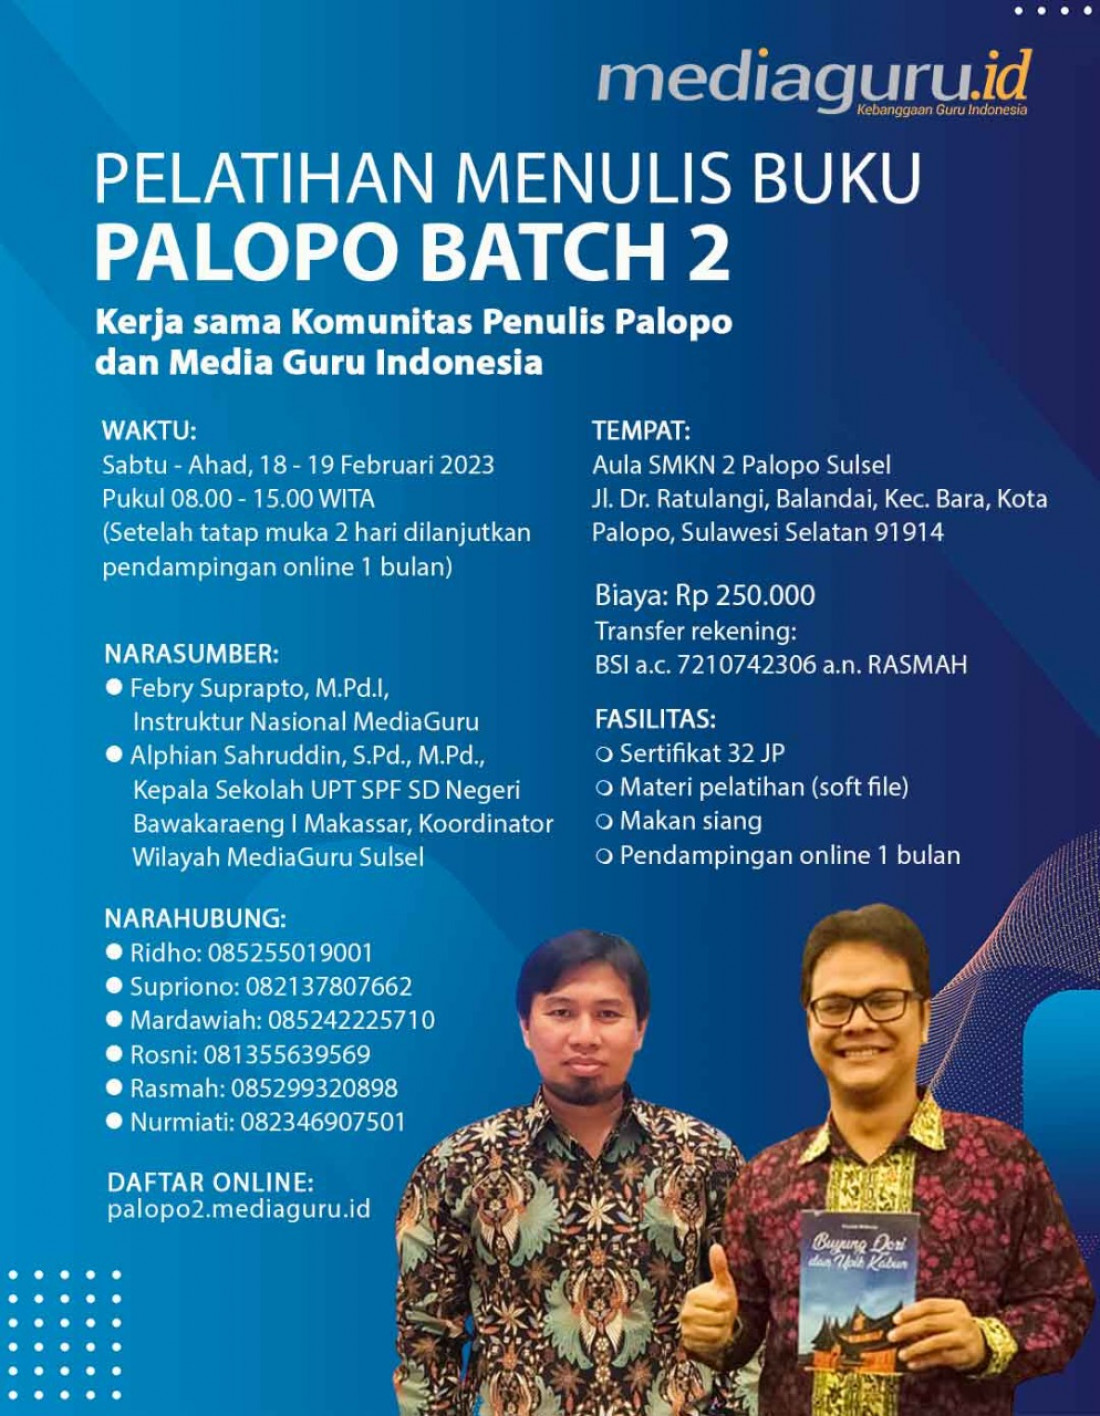 Pelatihan Menulis Buku PALOPO Batch 2 (18-19 Februari 2022)